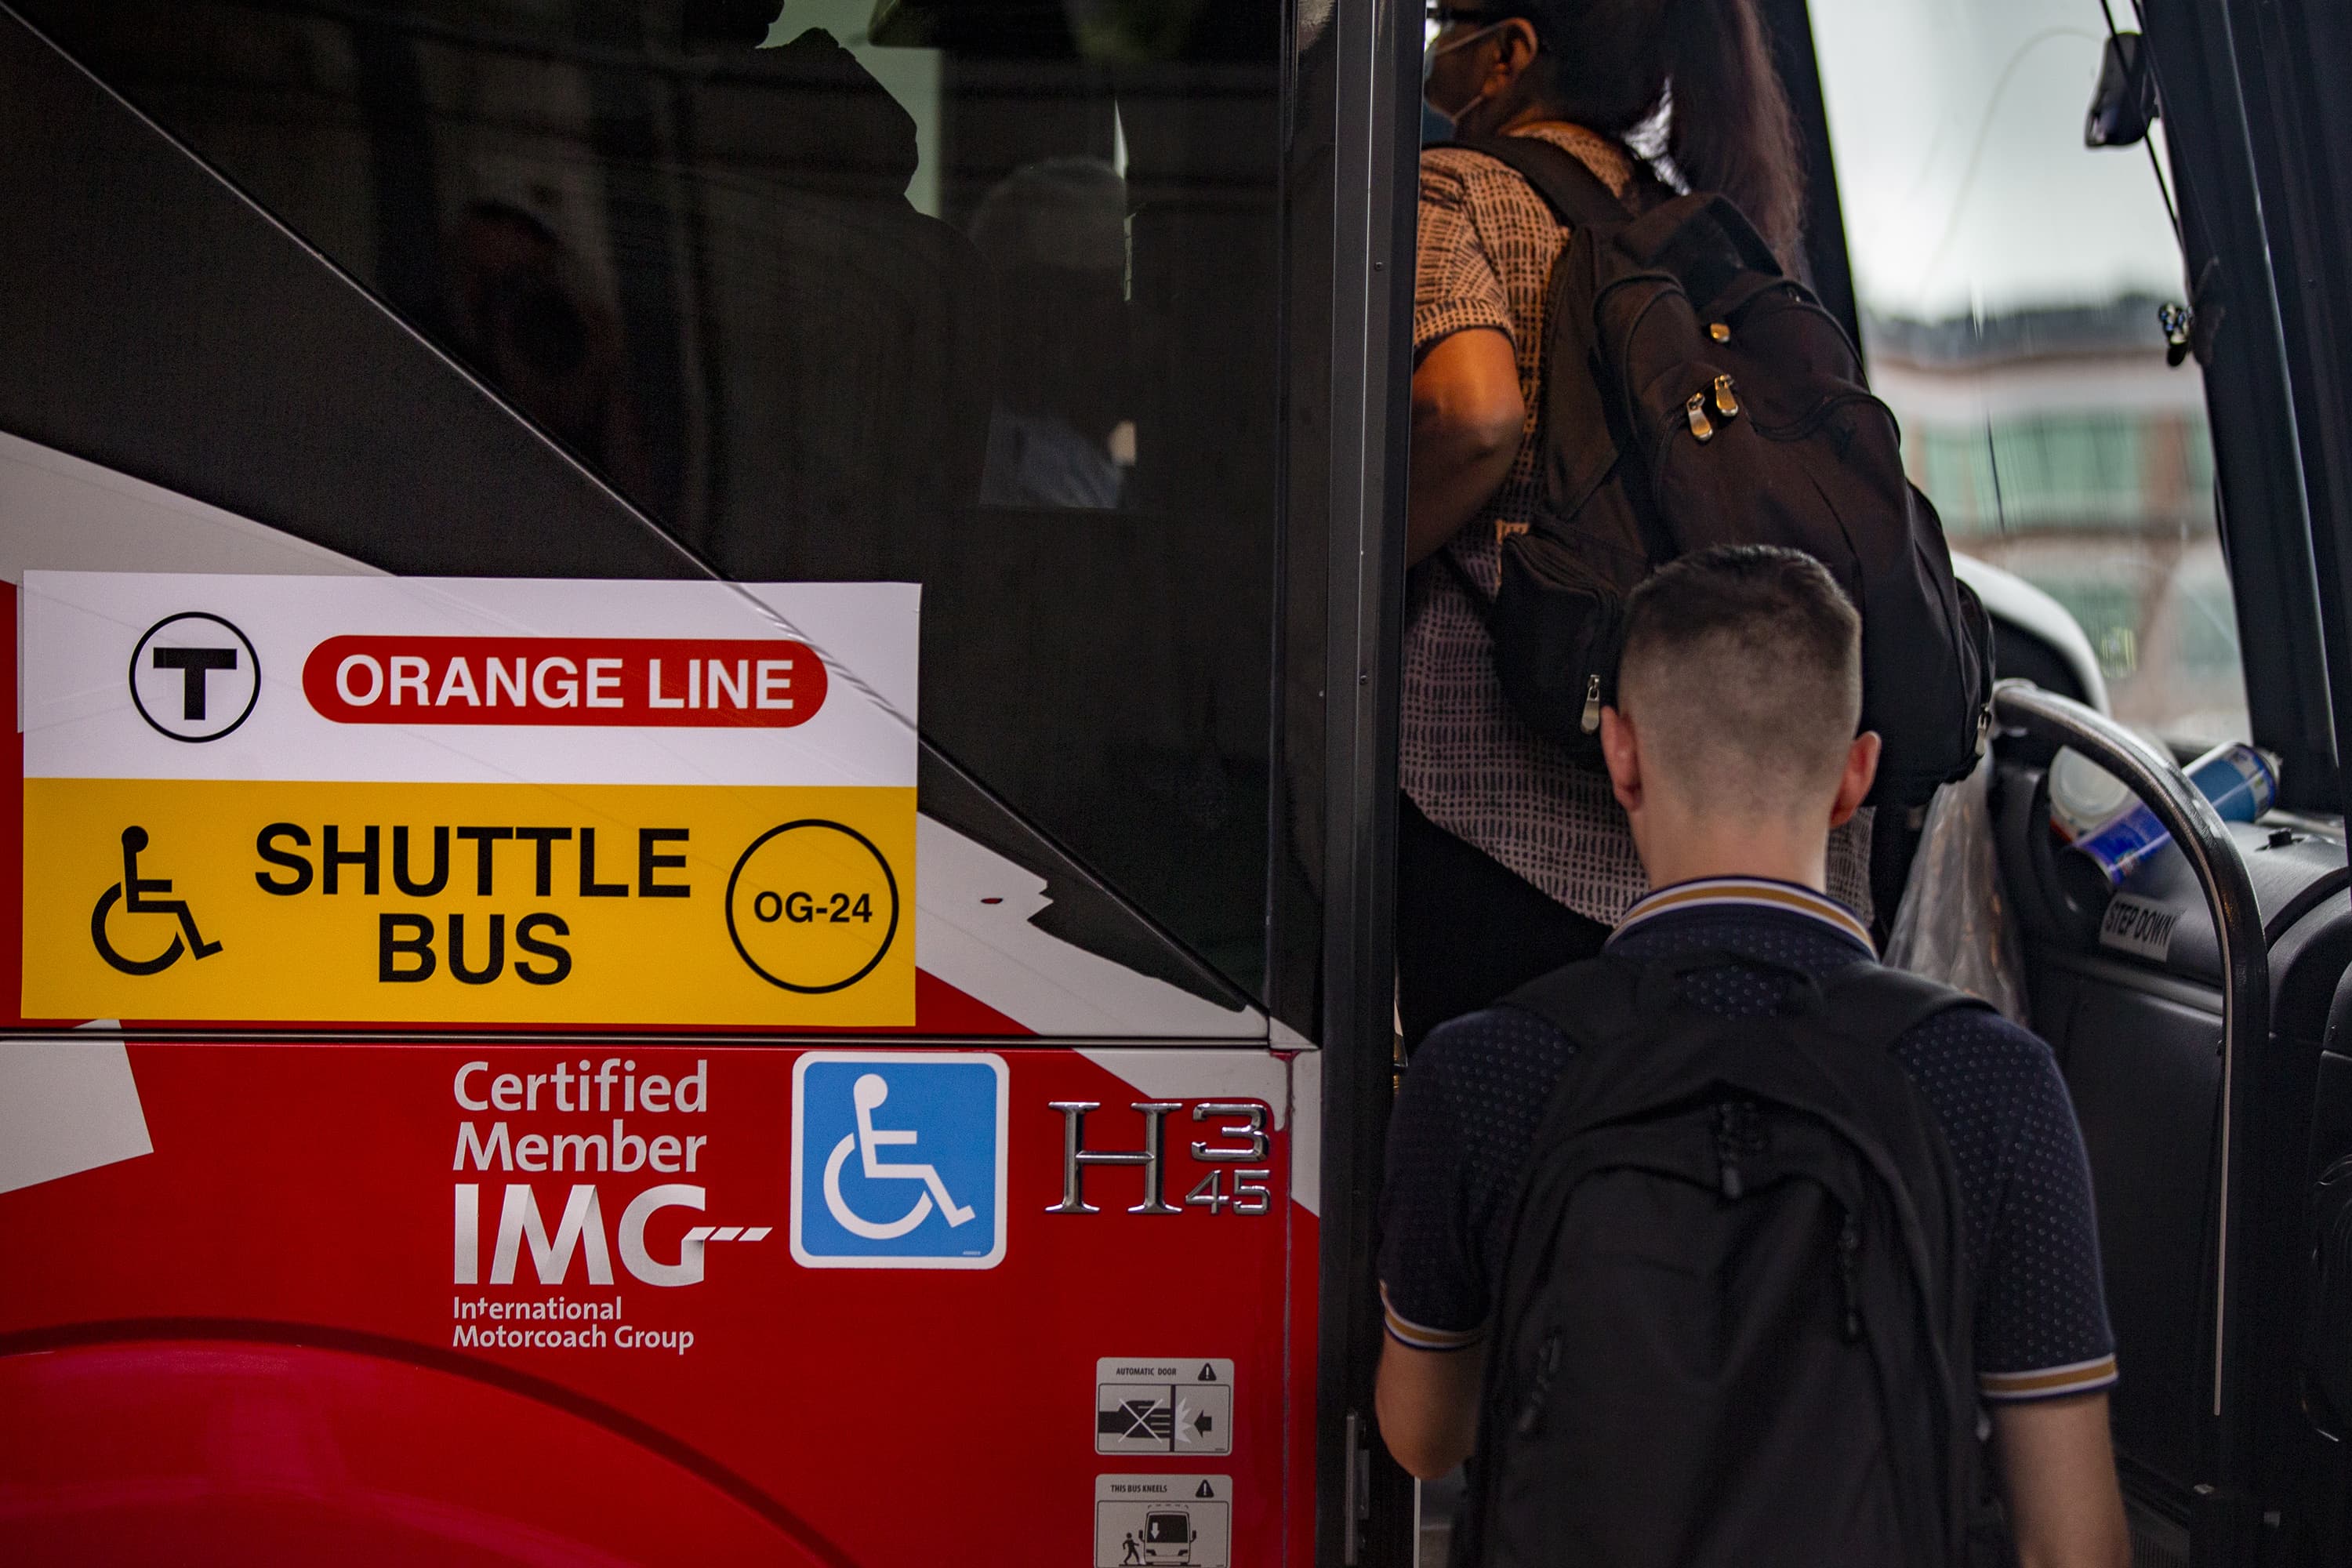 Early Monday morning commuters board an Orange Line shuttle bus at Sullivan Station. (Jesse Costa/WBUR)